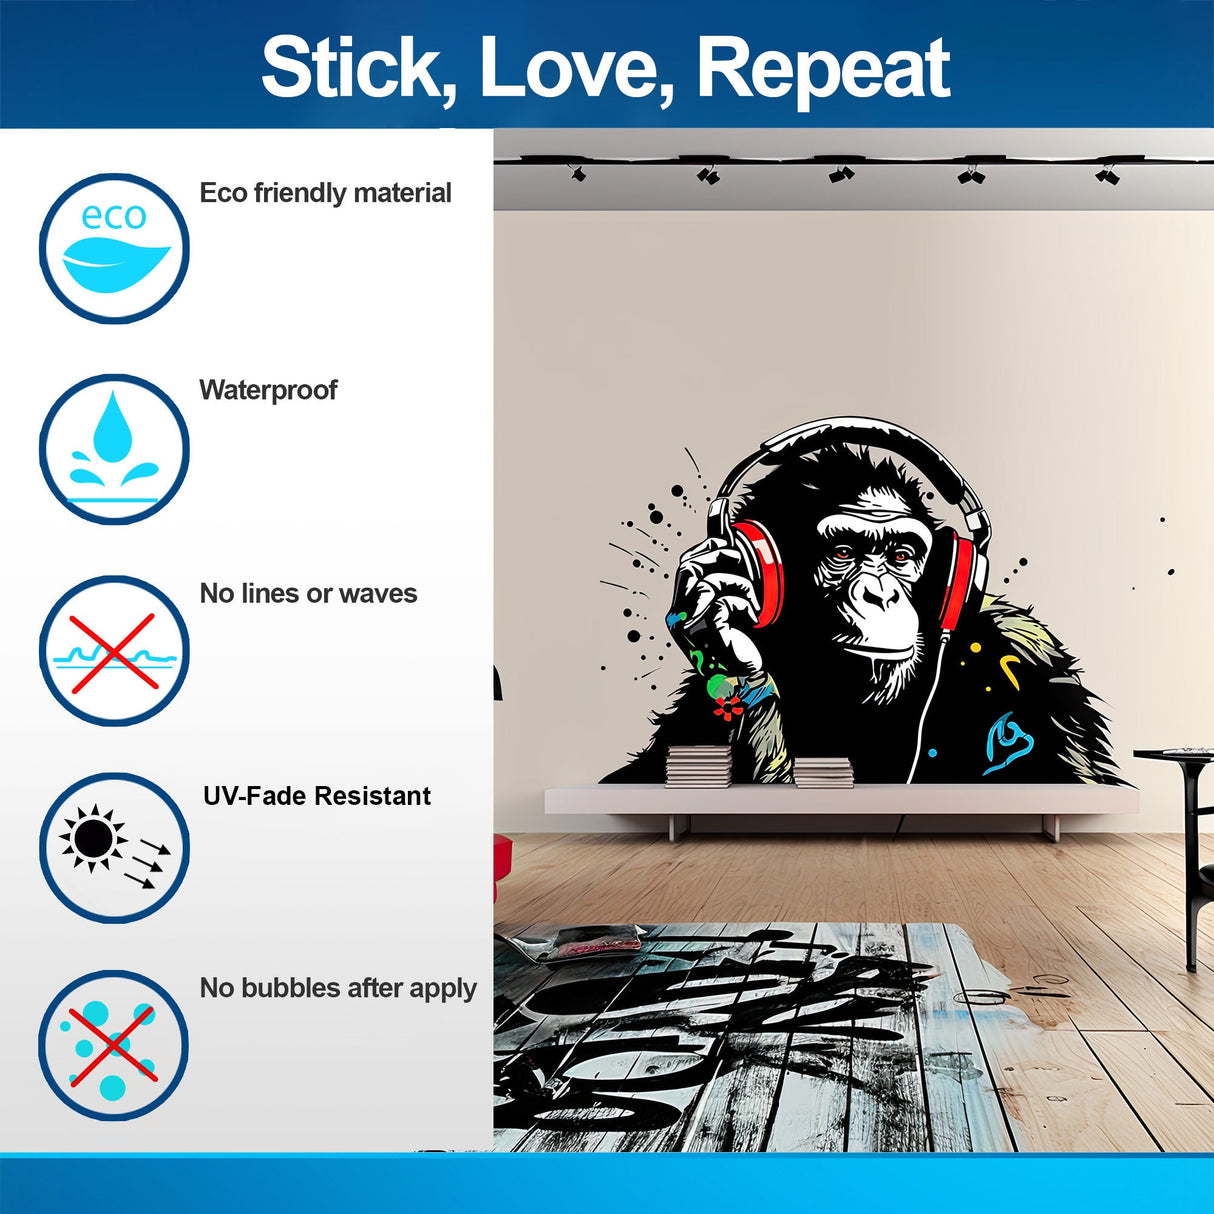 Headphone Chimp Wall Art Sticker - Urban Jungle DJ Ape Decal